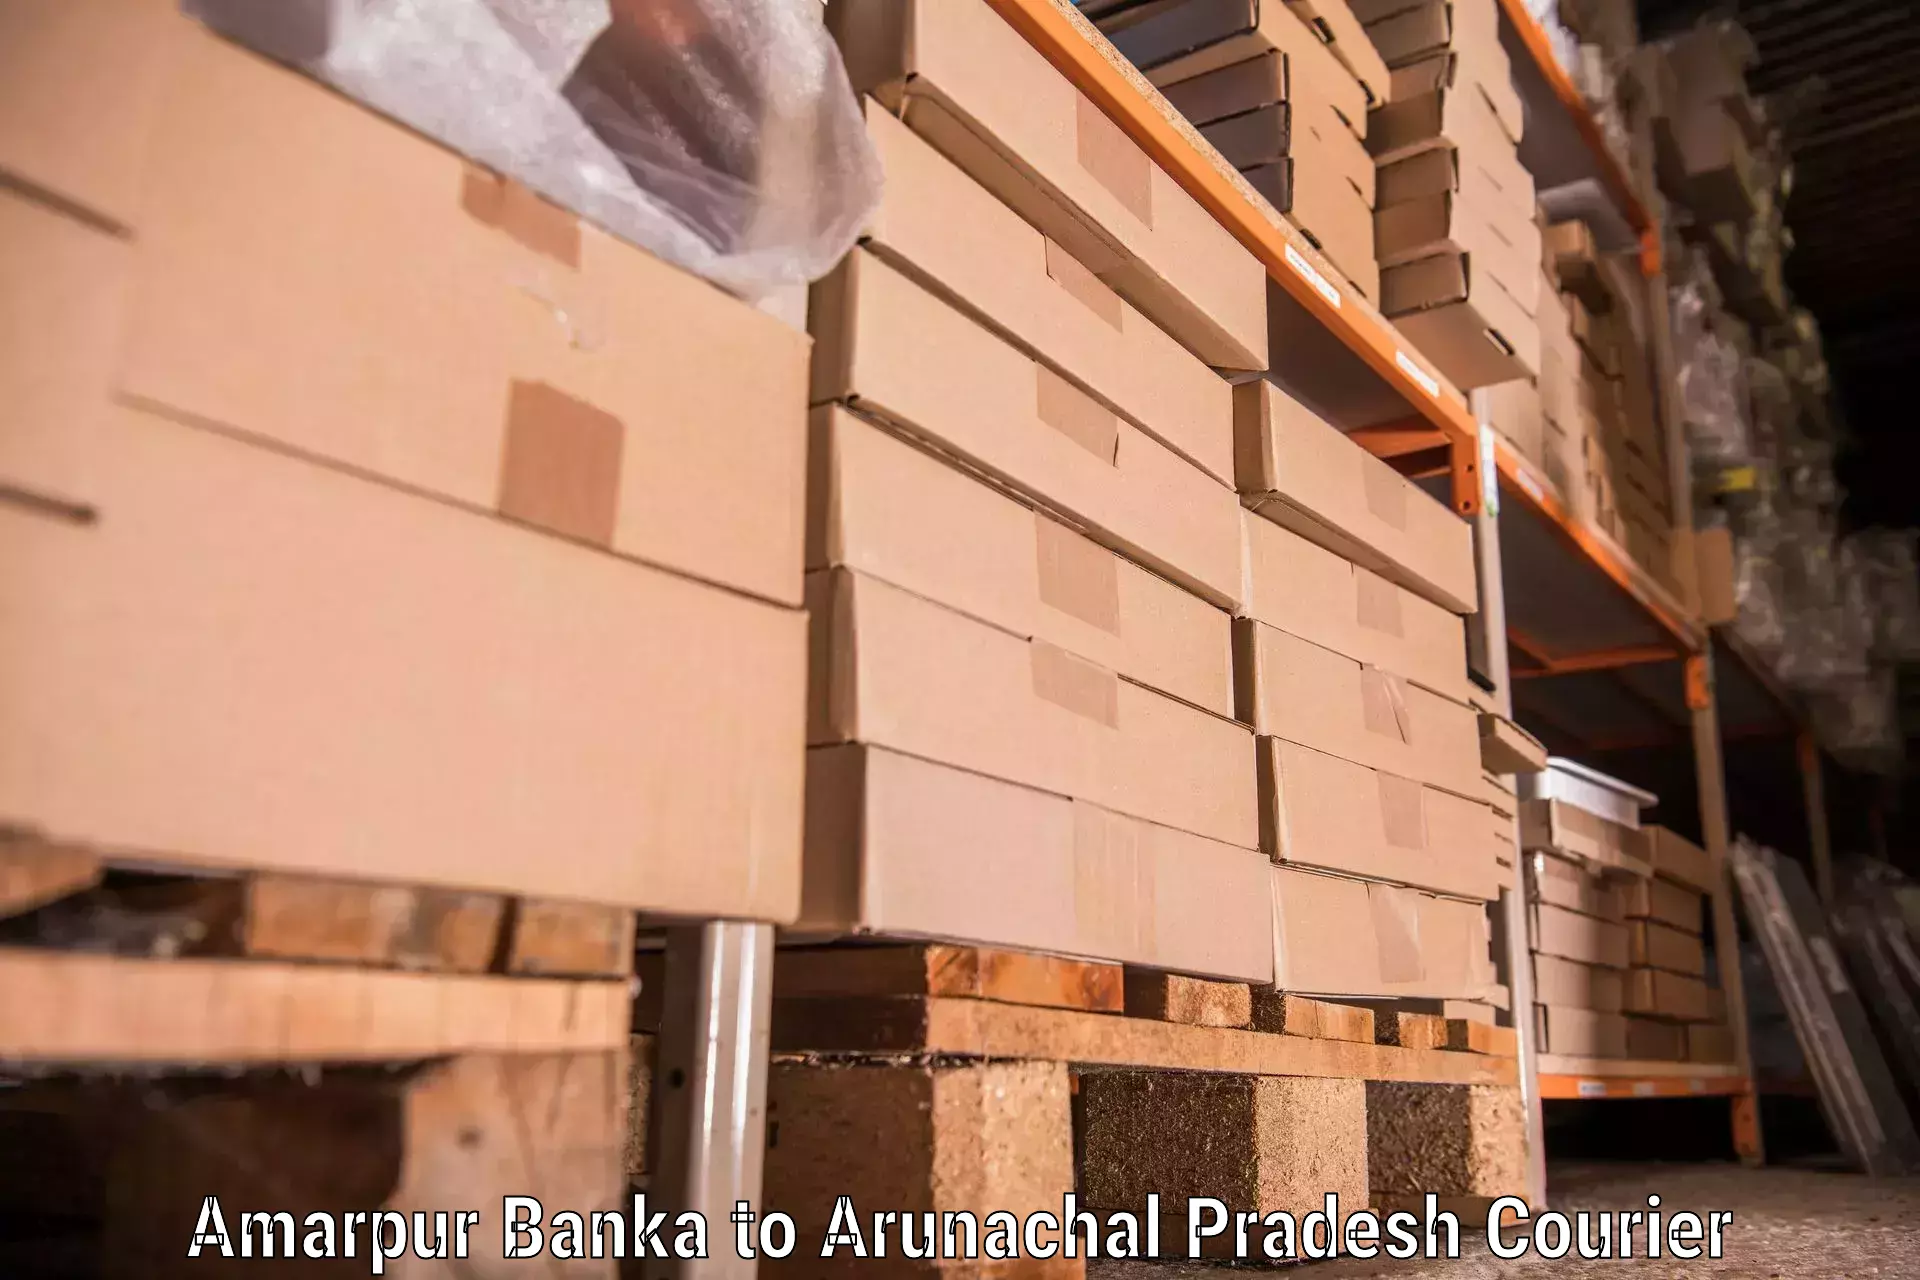 Professional movers and packers Amarpur Banka to Arunachal Pradesh